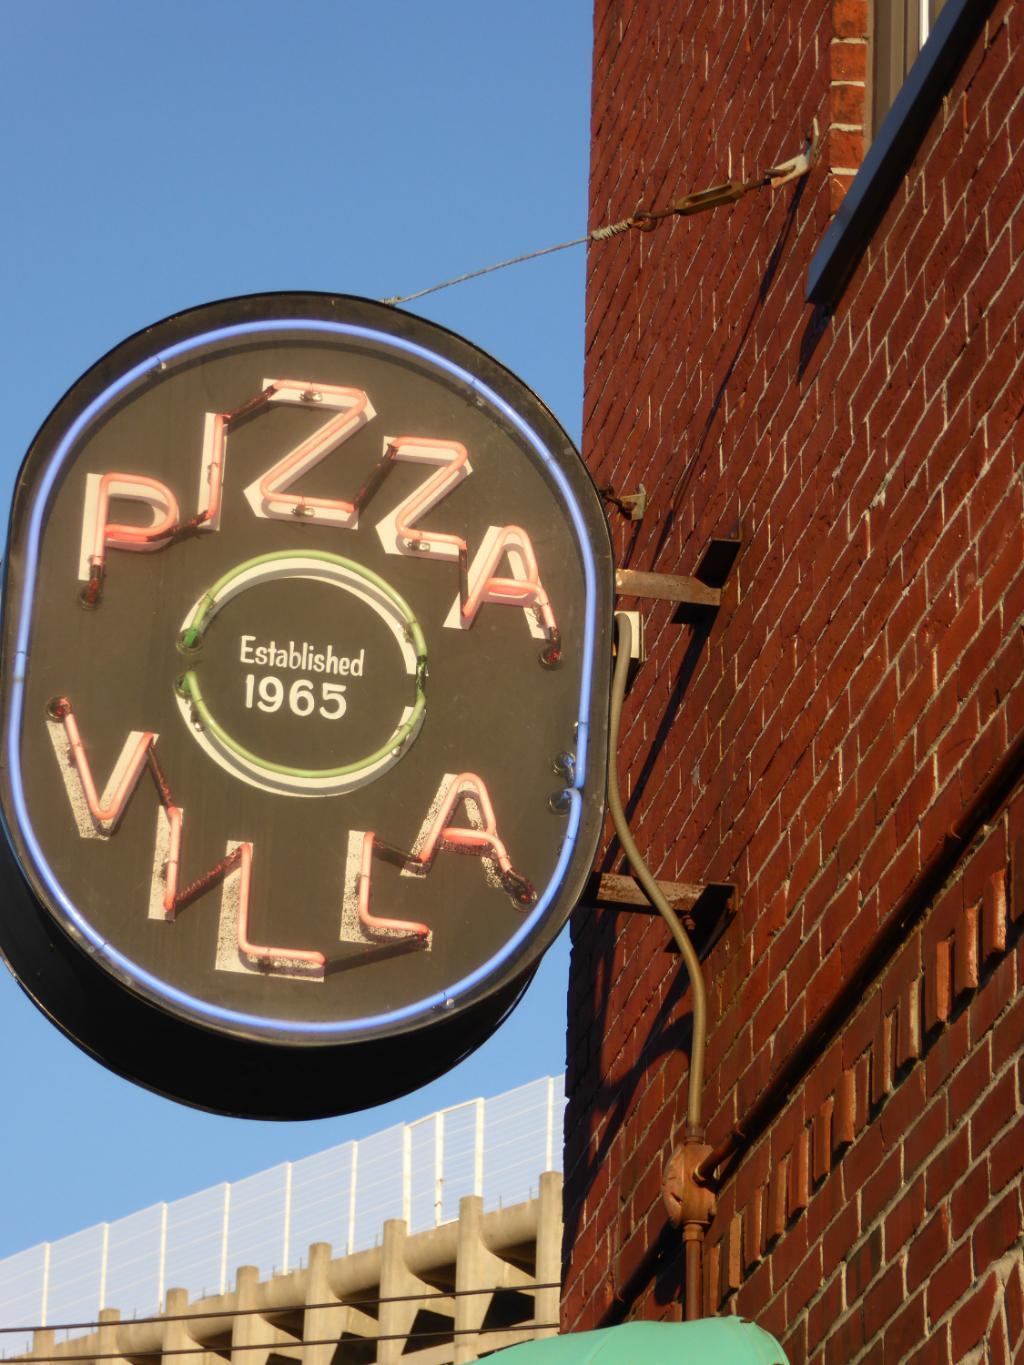 Pizza Villa